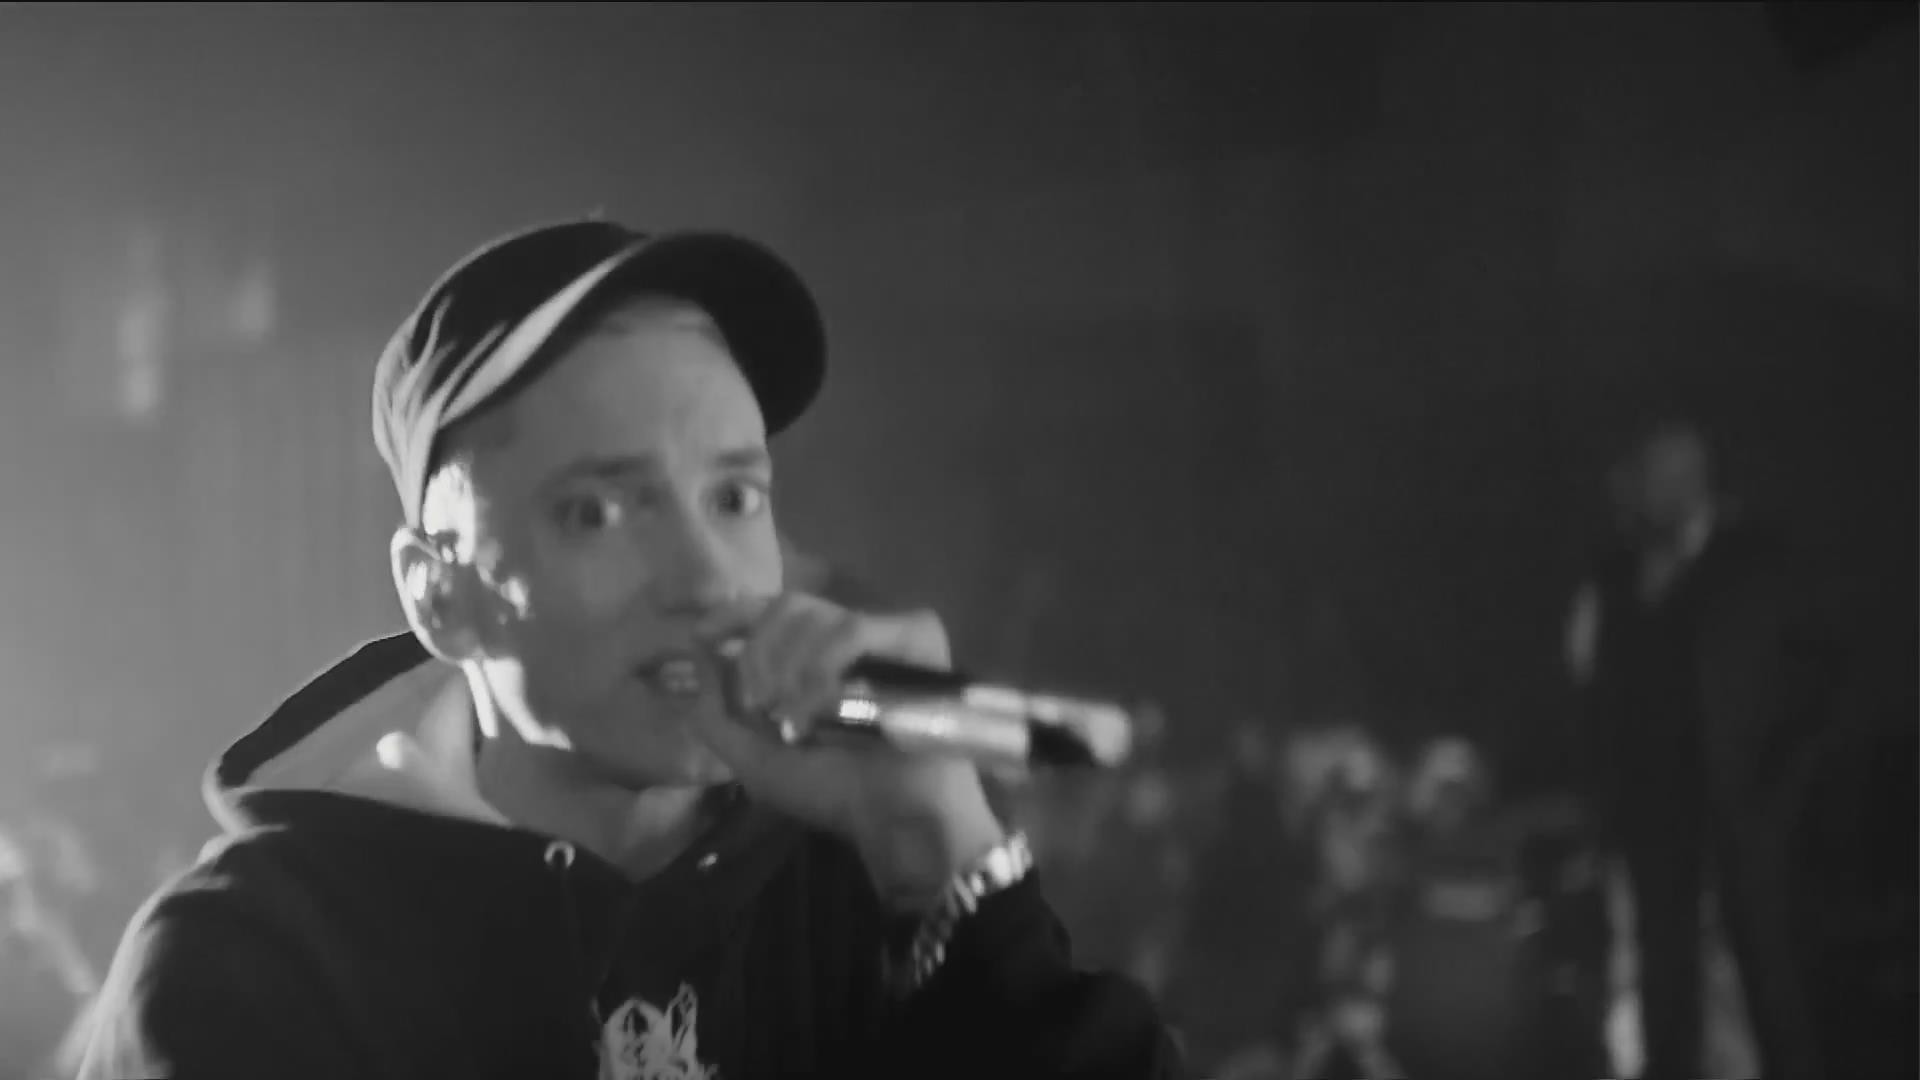 1920x1080 Eminem - Rap God Live at YouTube Music Awards 2013